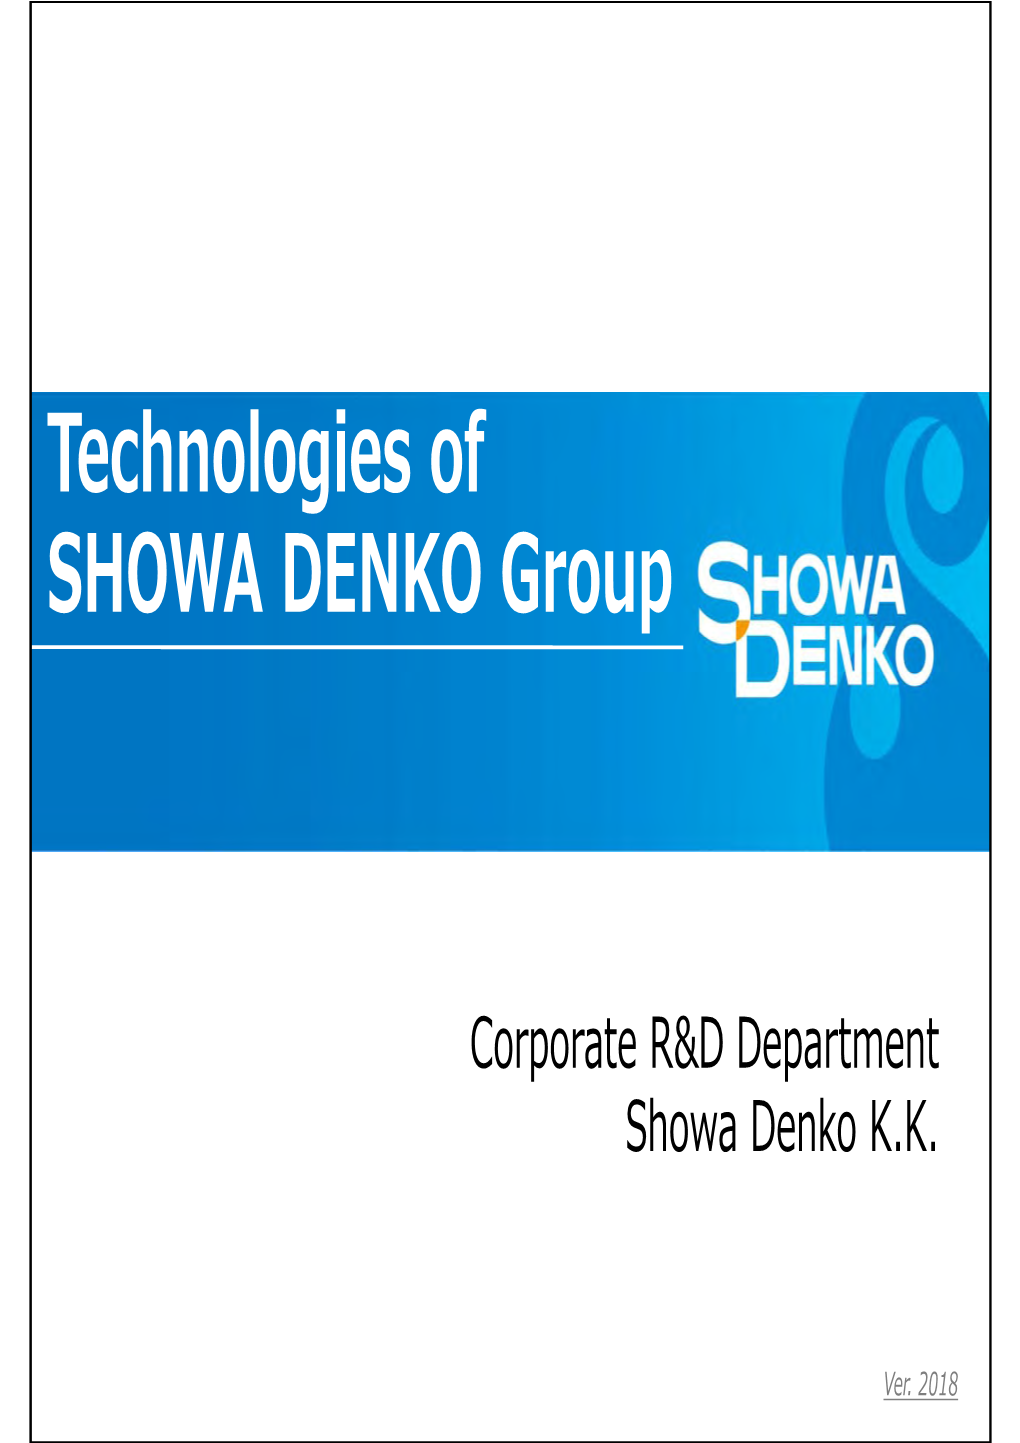 Technologies of SHOWA DENKO Group